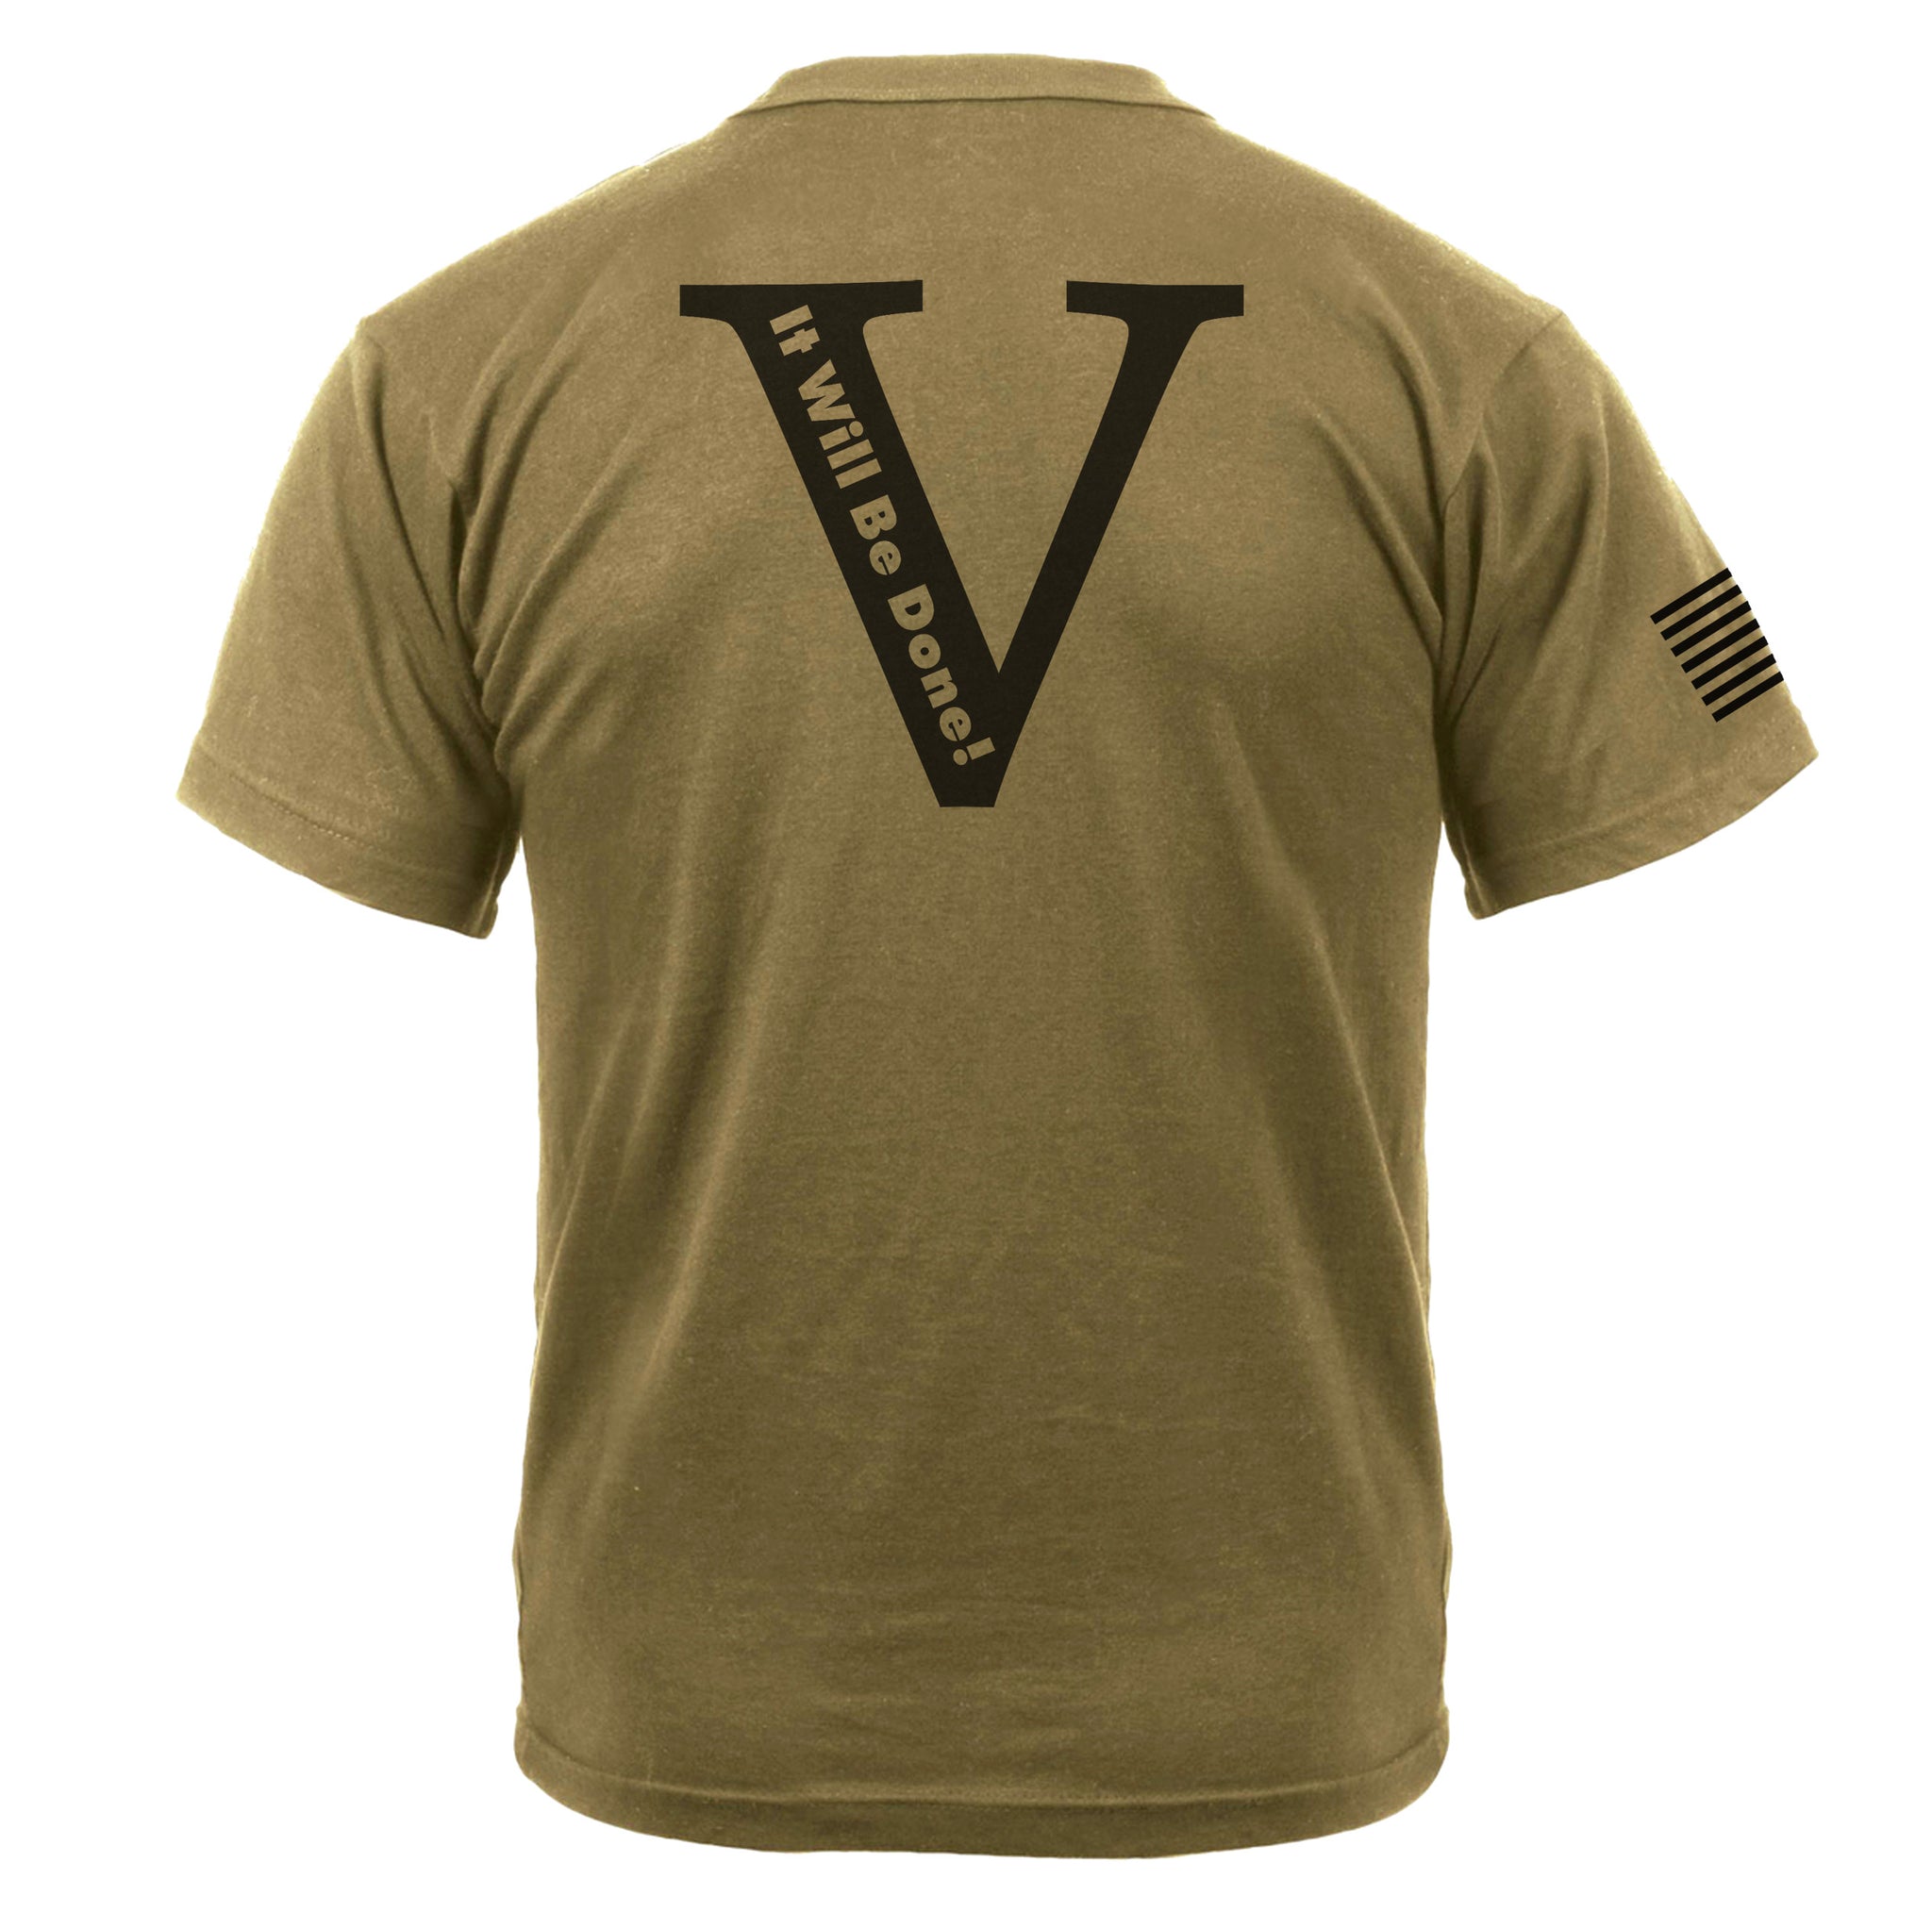 V Corps Uniform Shirt